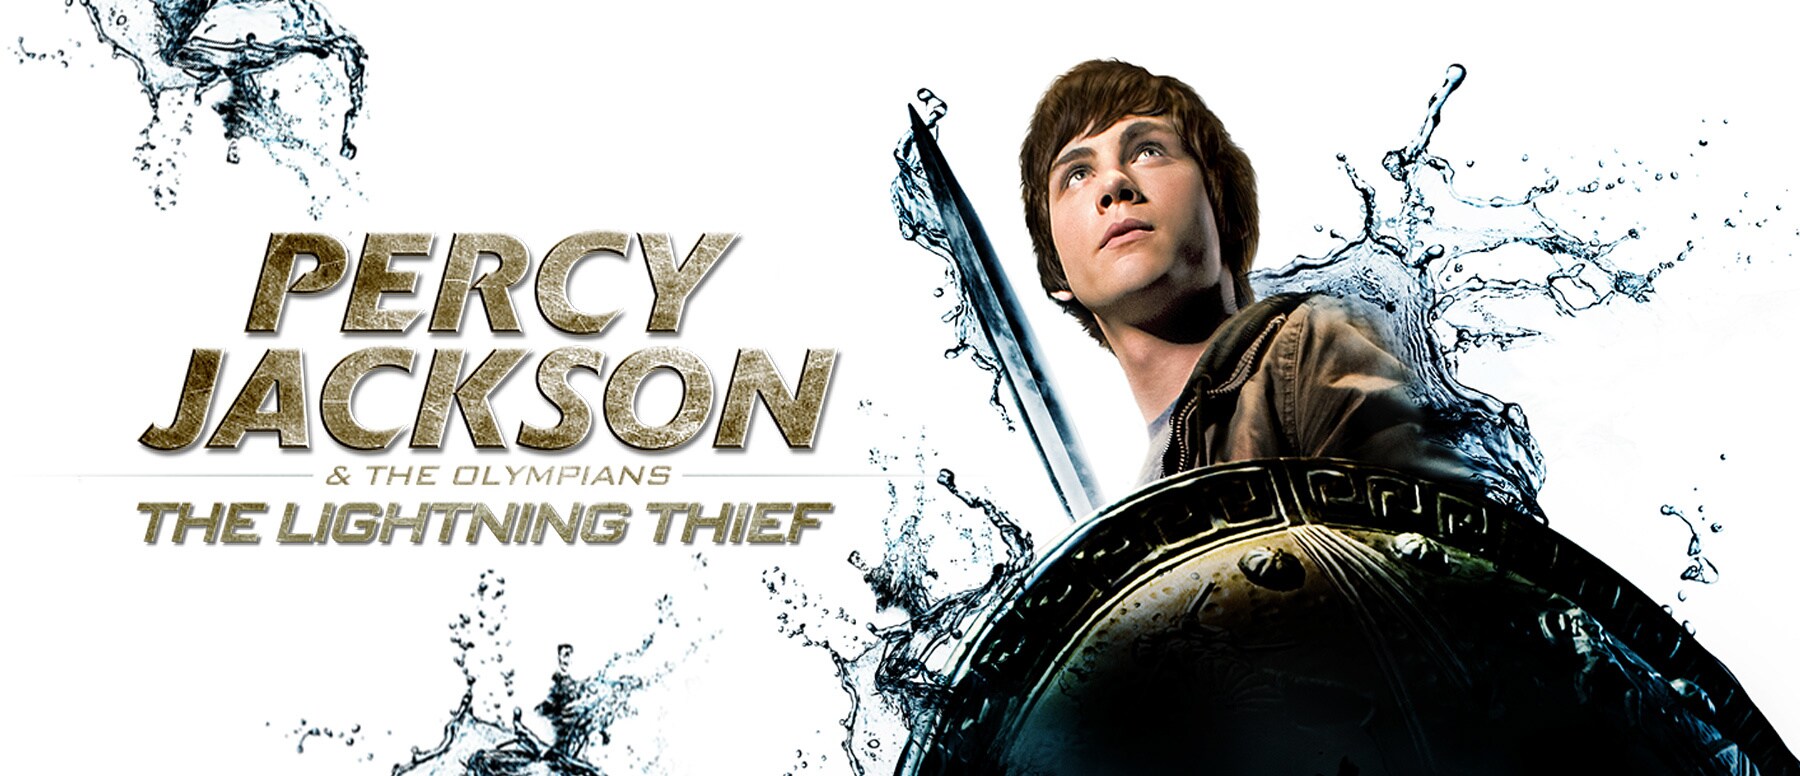 percy jackson lightning thief full movie online